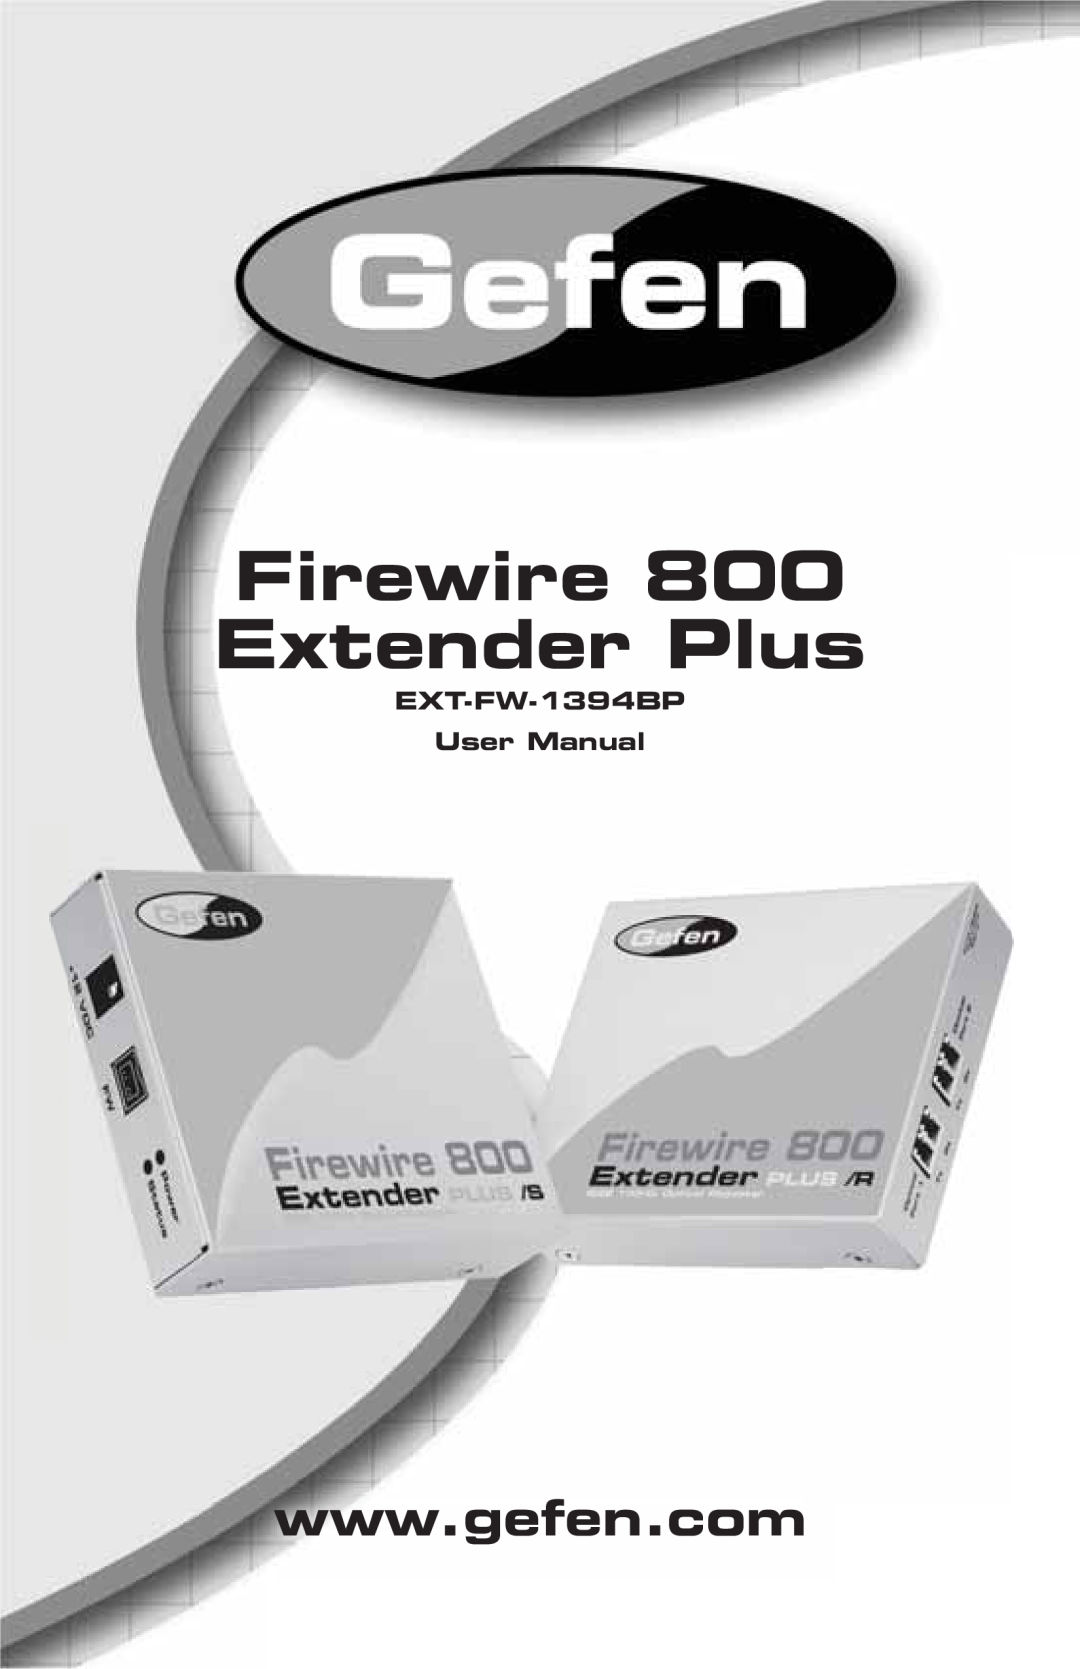 Gefen user manual EXT-FW-1394BP User Manual, Firewire 800 Extender Plus 